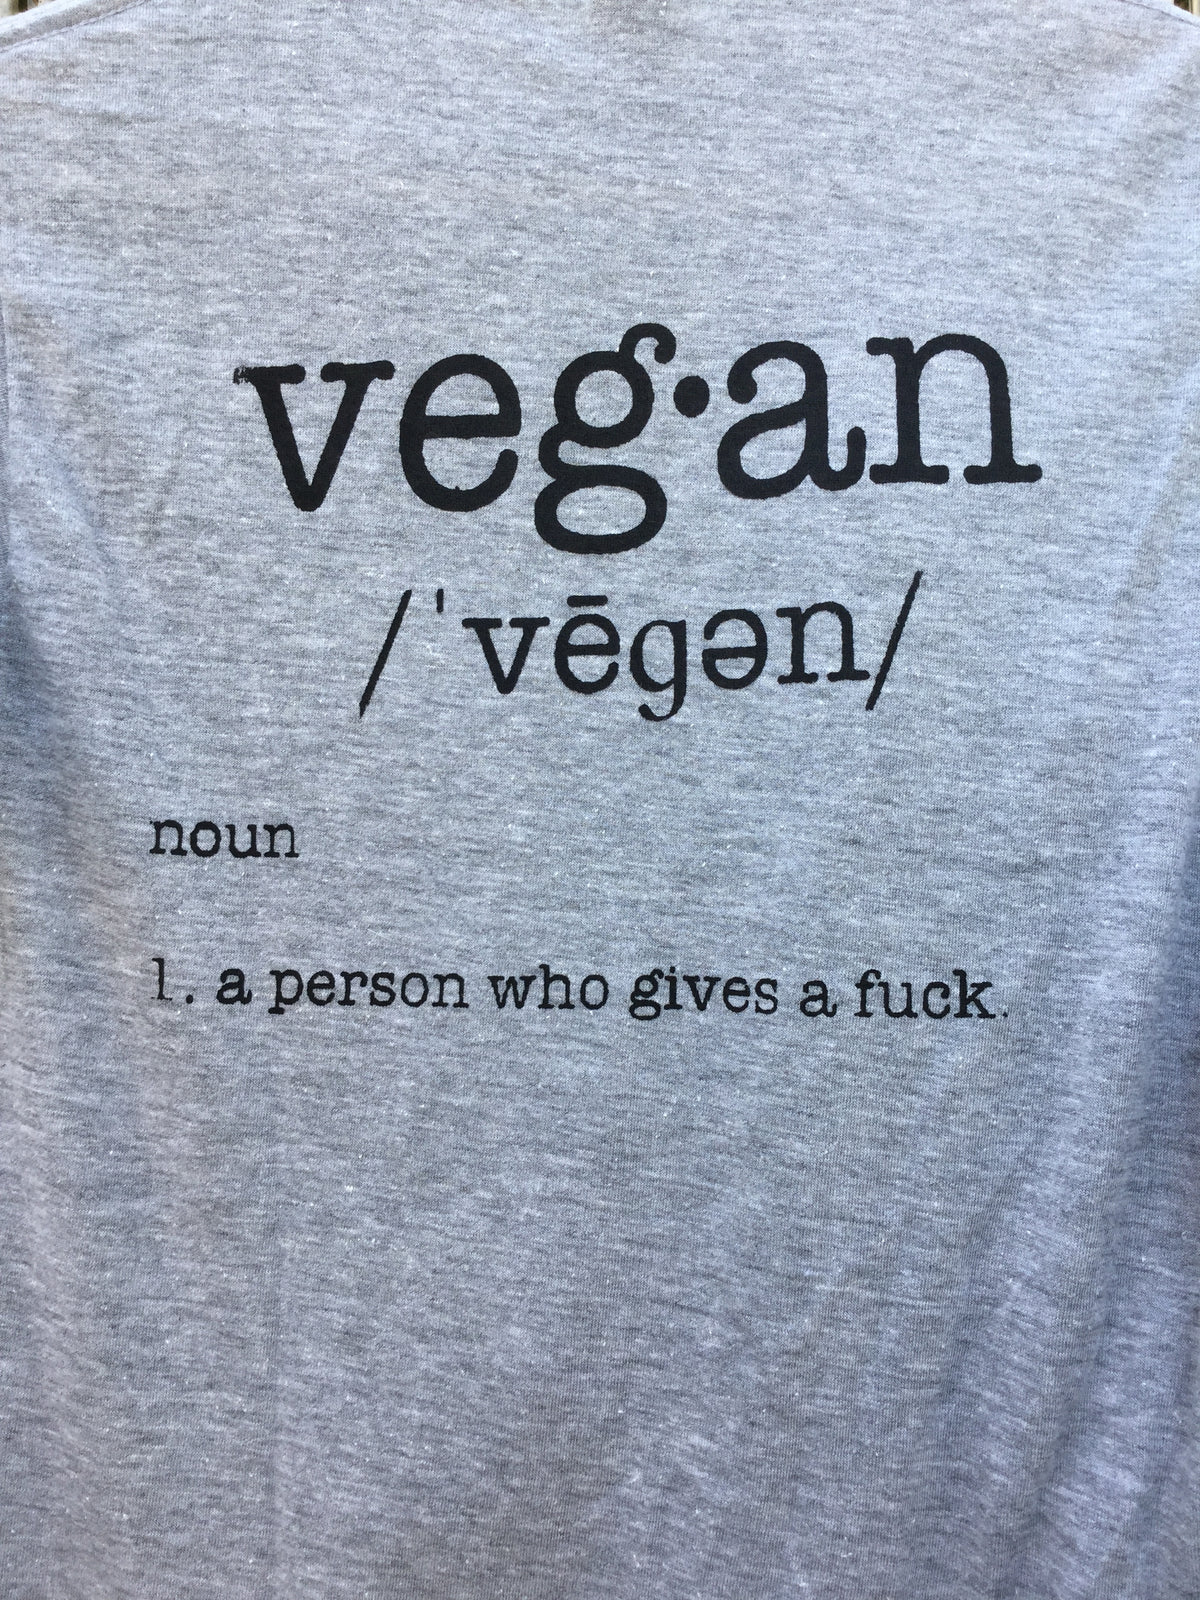 Vegan Definition T-Shirt